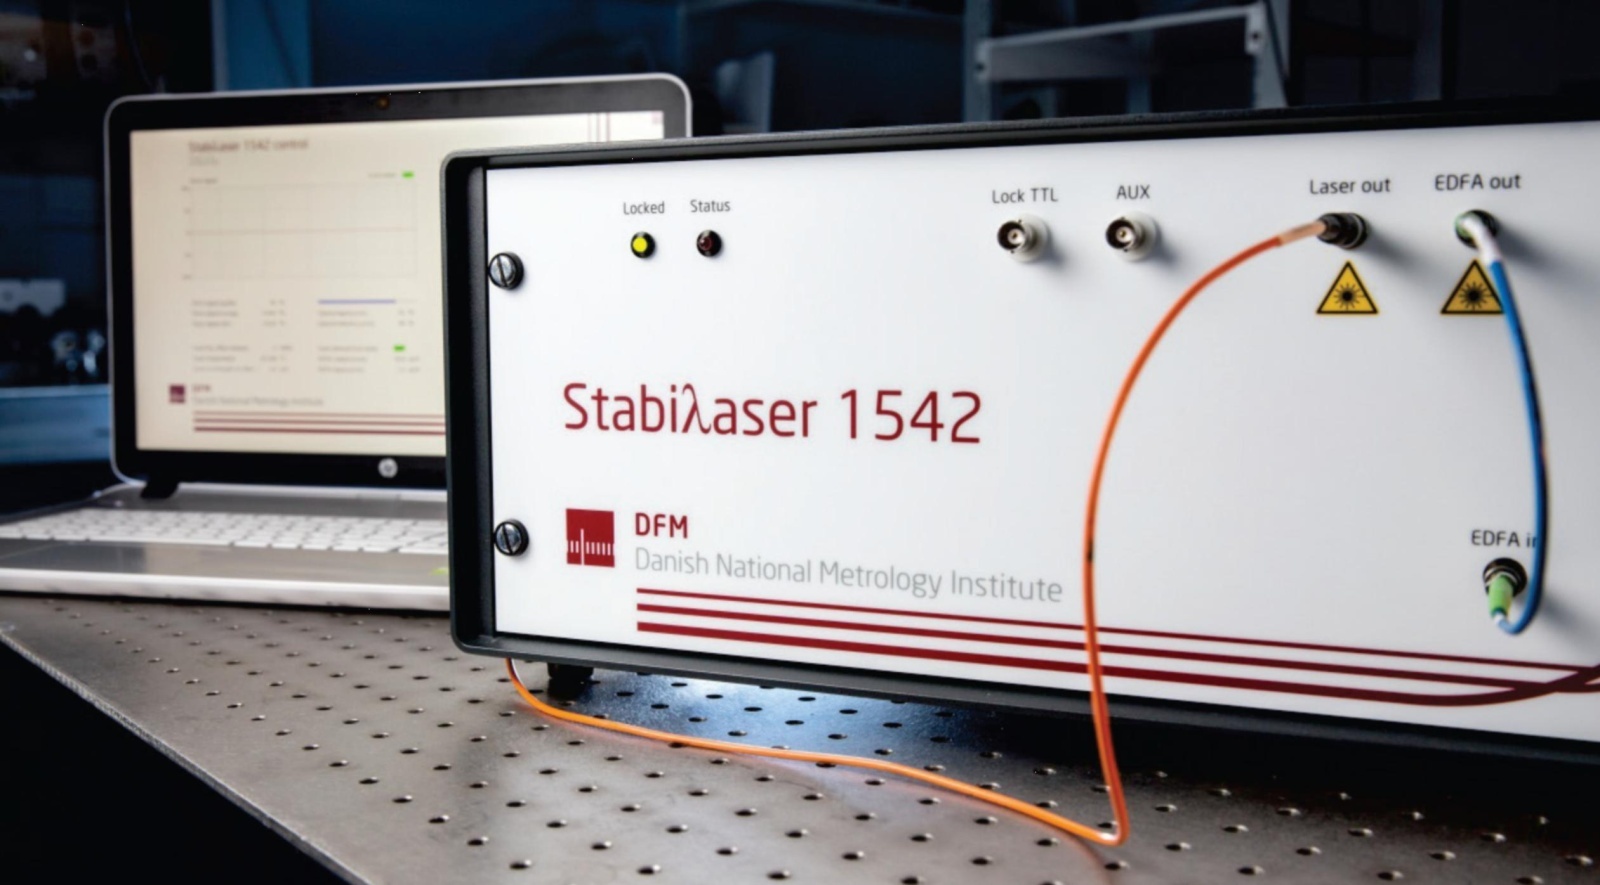 DFM乙炔稳频窄线宽激光器Stabiλaser 1542的图片